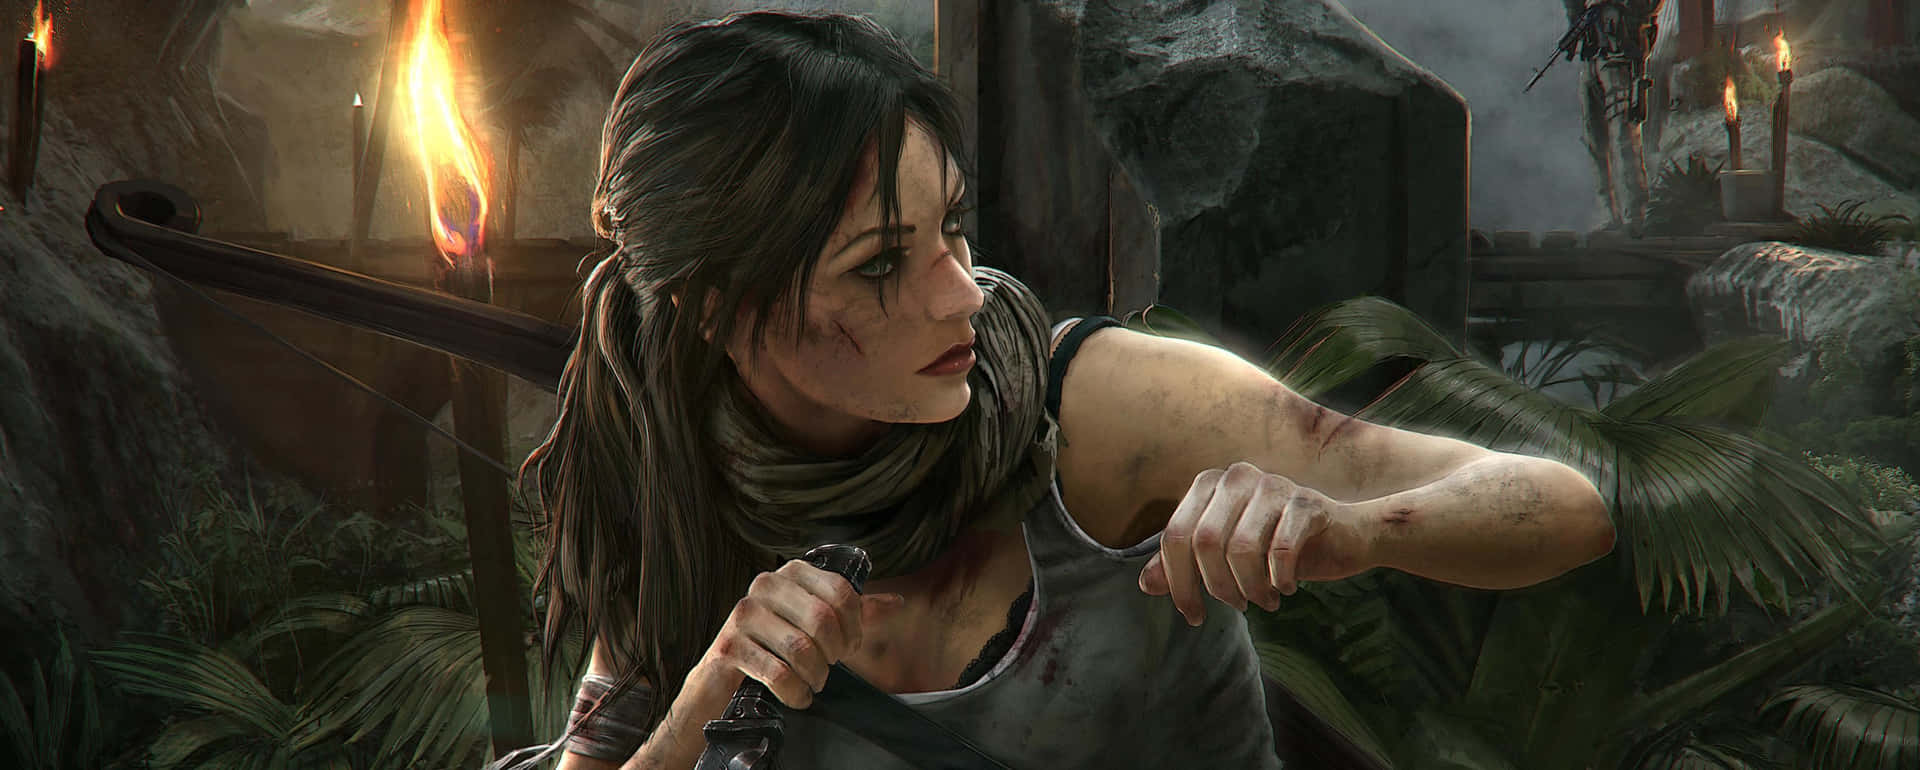 Lara Croft Combat 3440x1440p Rise Of The Tomb Raider Background